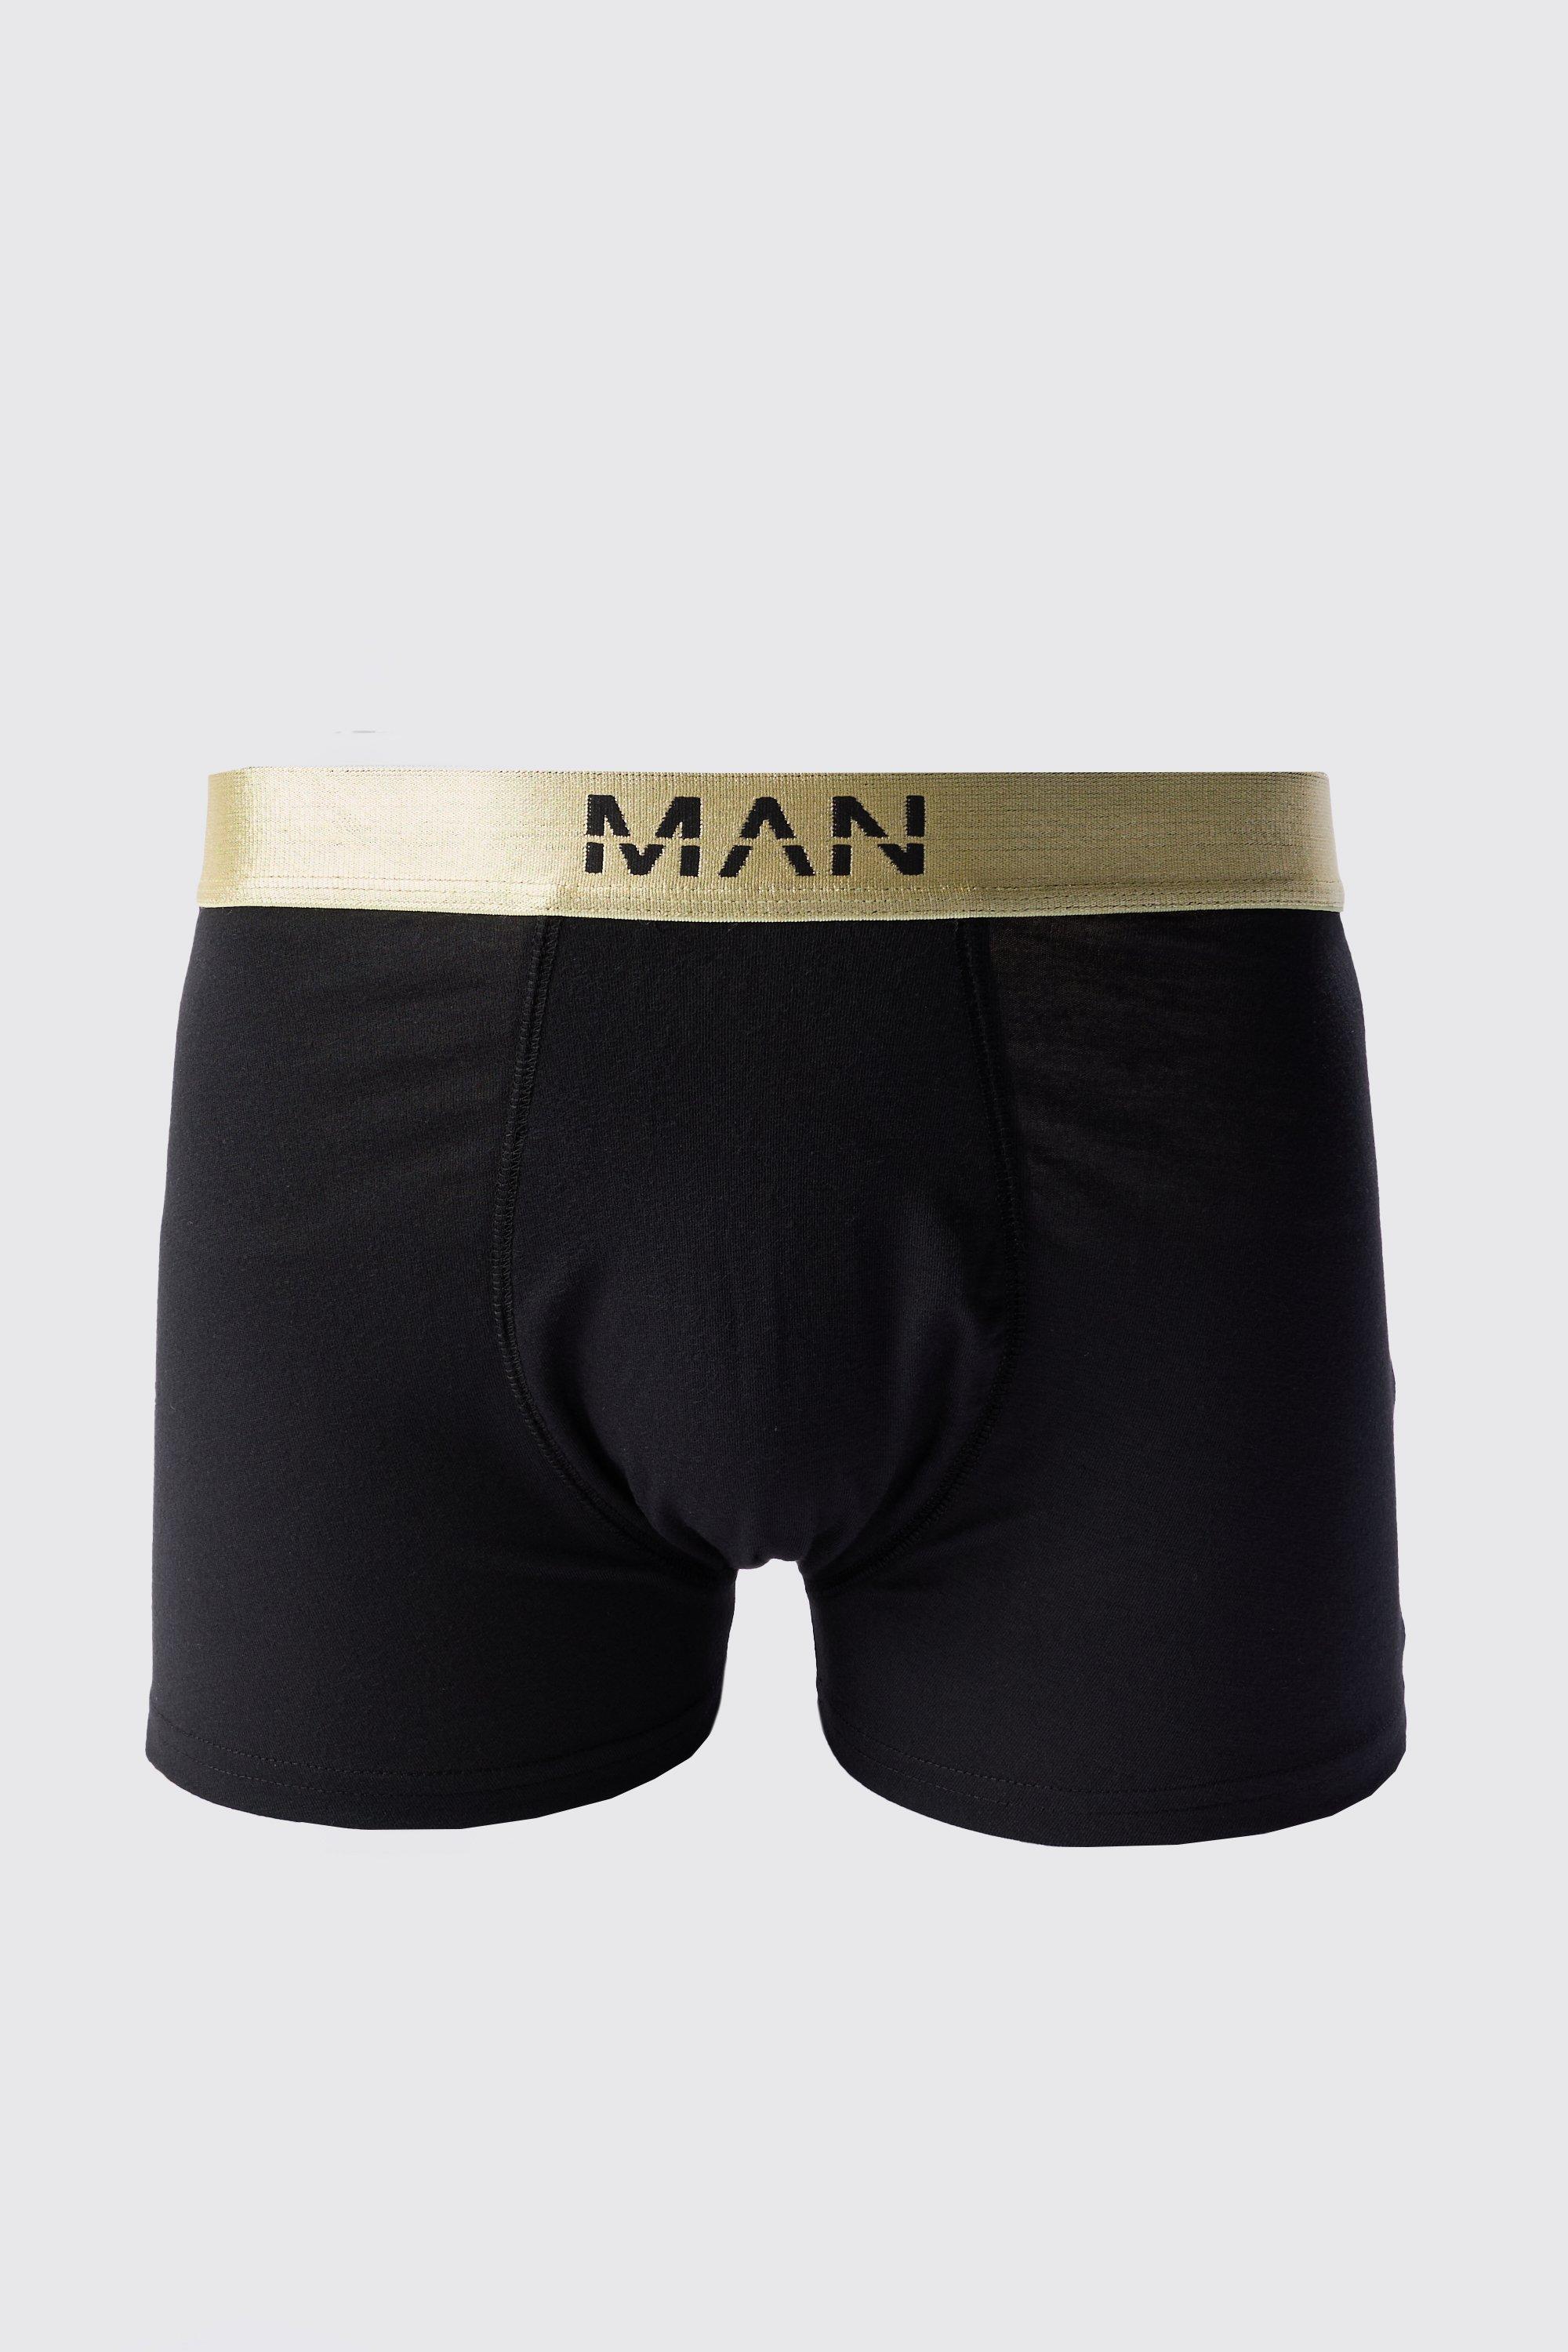 man dash gold waistband boxers in black homme - noir - xl, noir